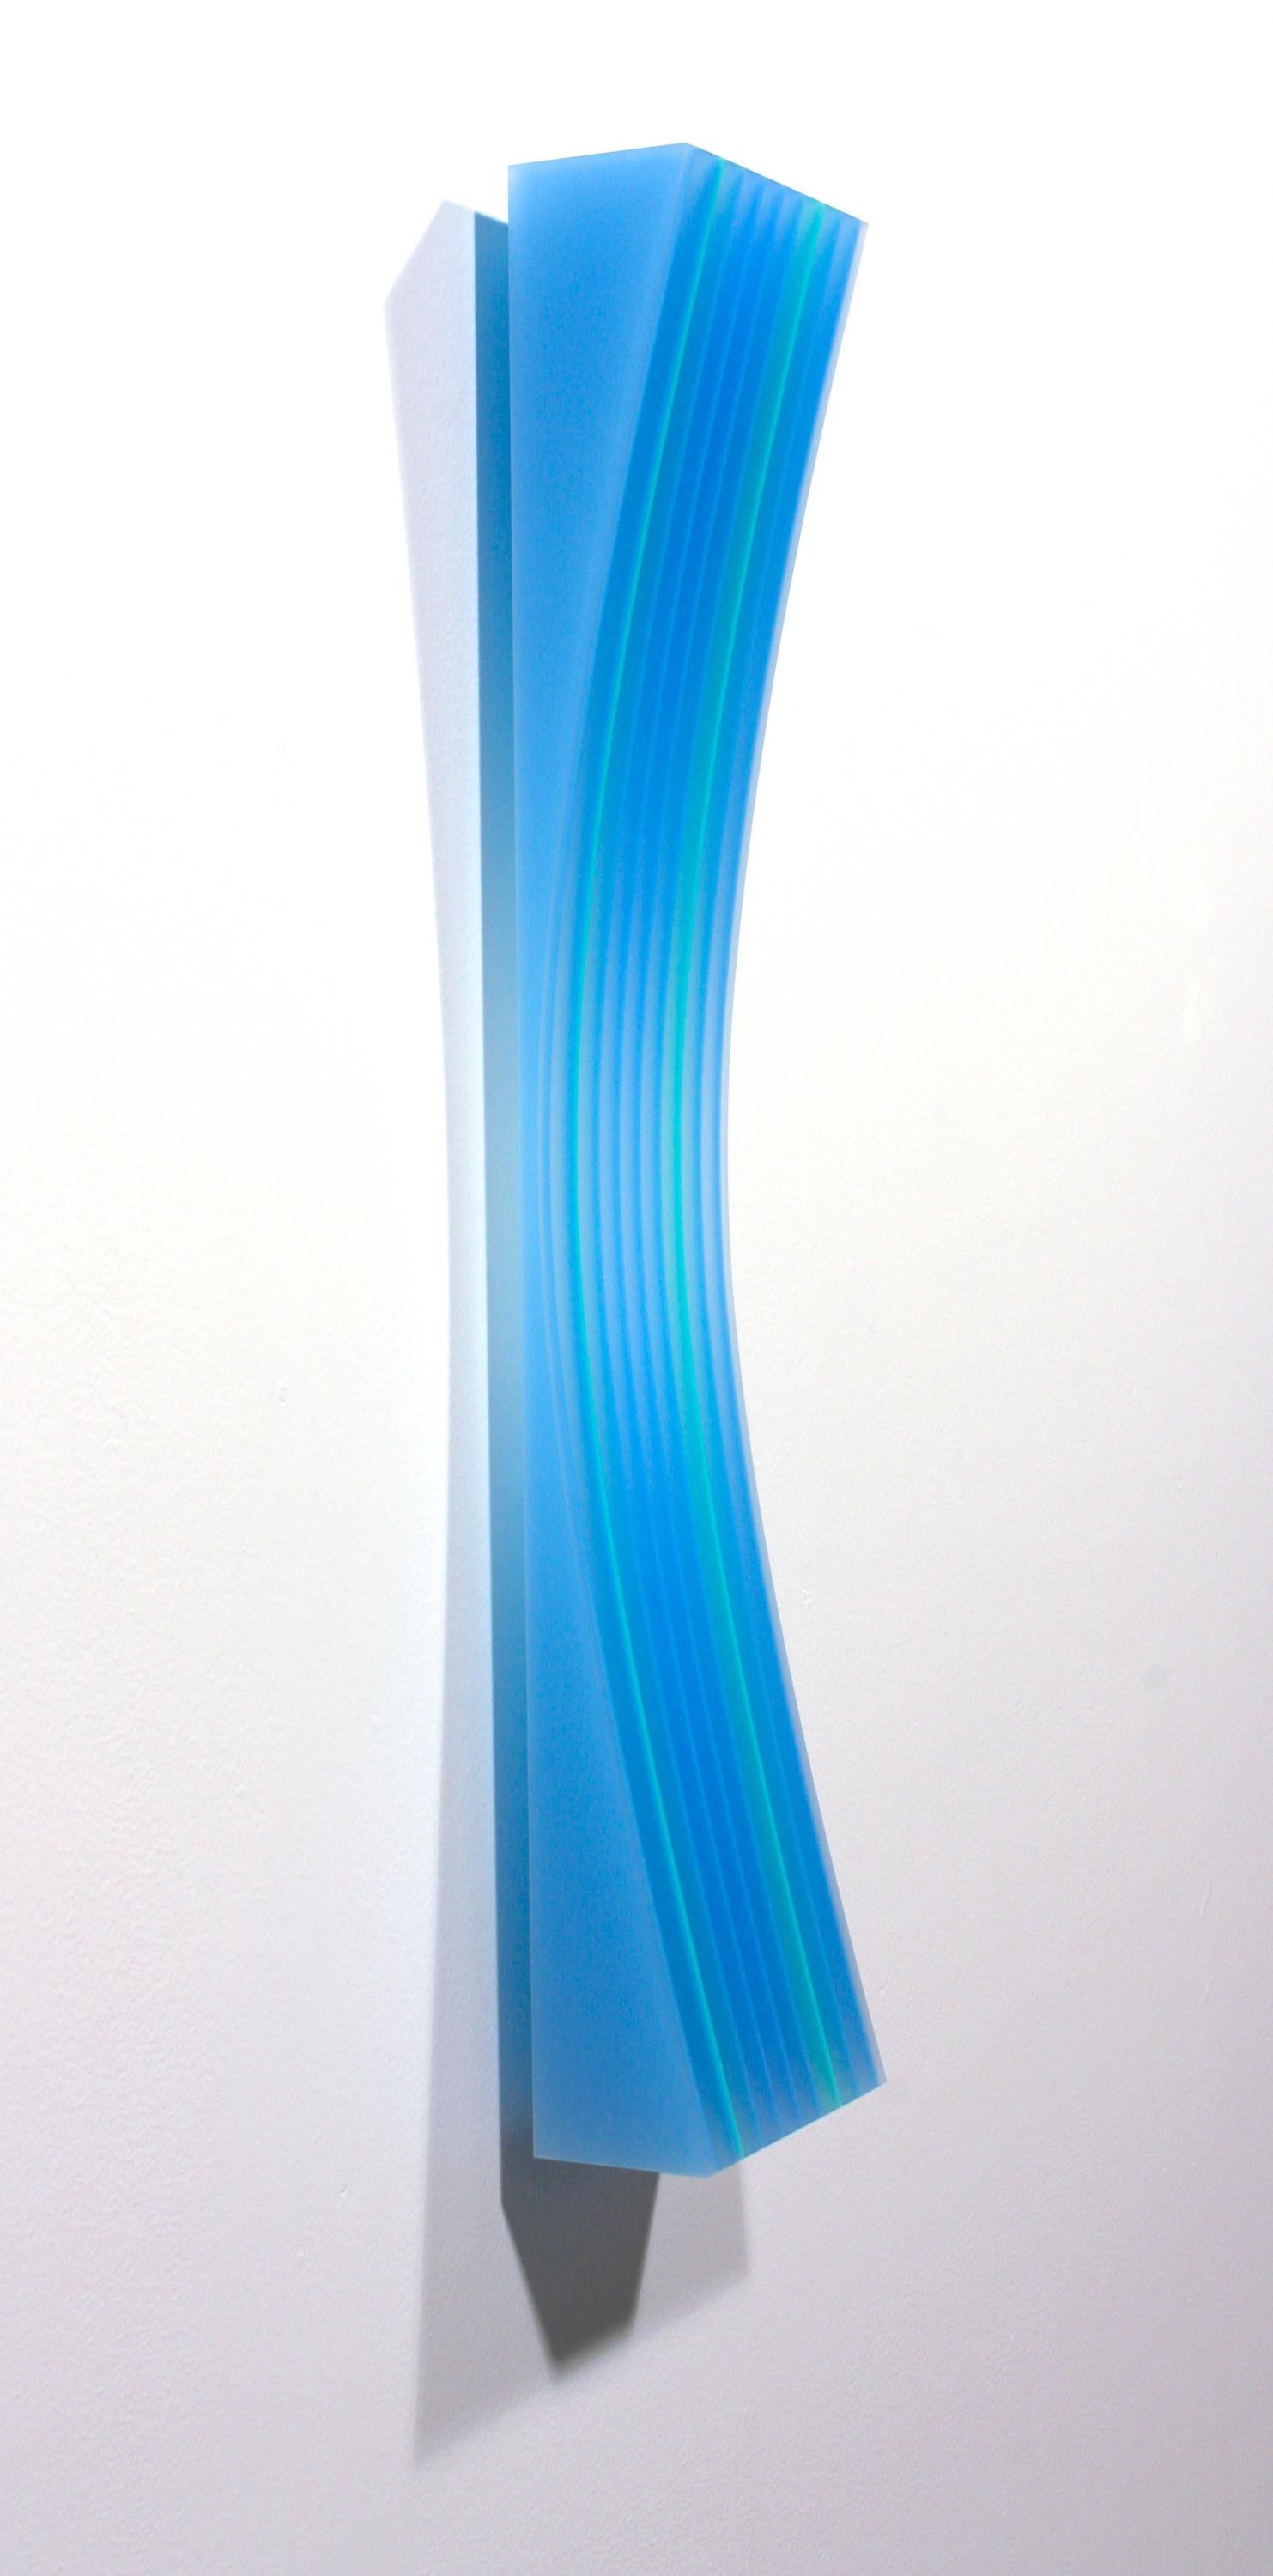 BLUEGREEN 2 AQUA Concave - Sculpture by Eric Zammitt